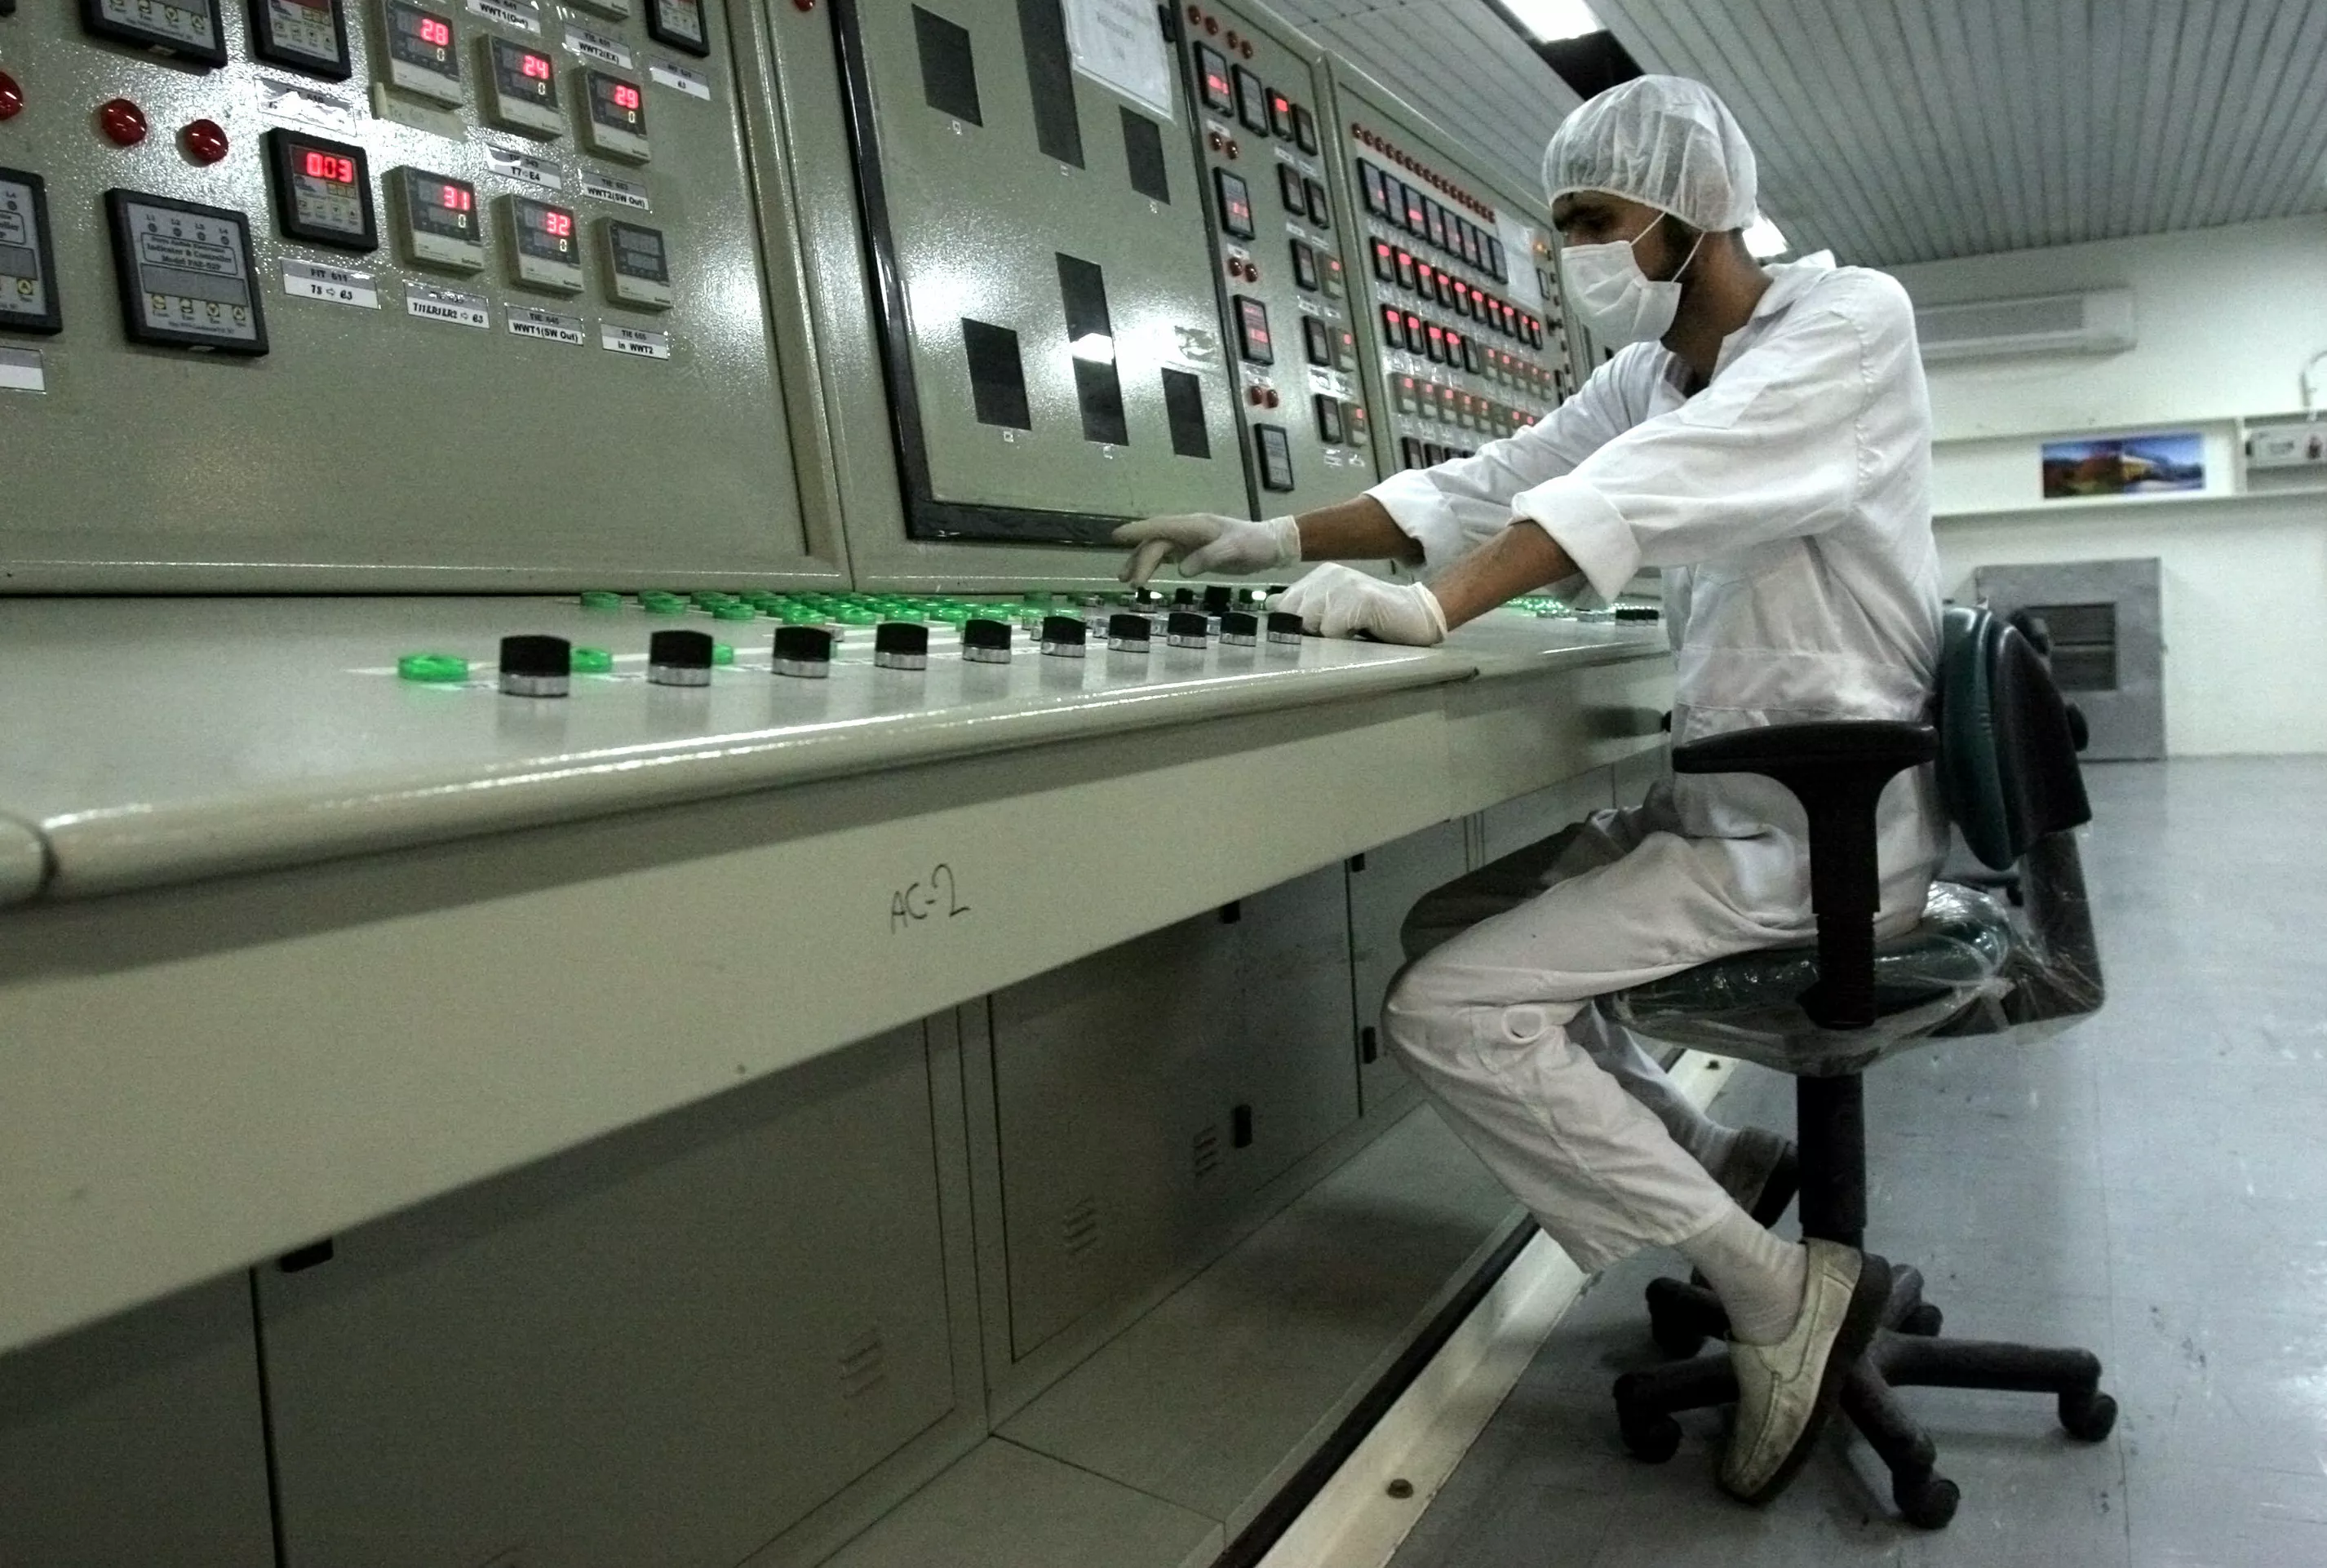 An Iranian technician works at a uranium conversion facility.